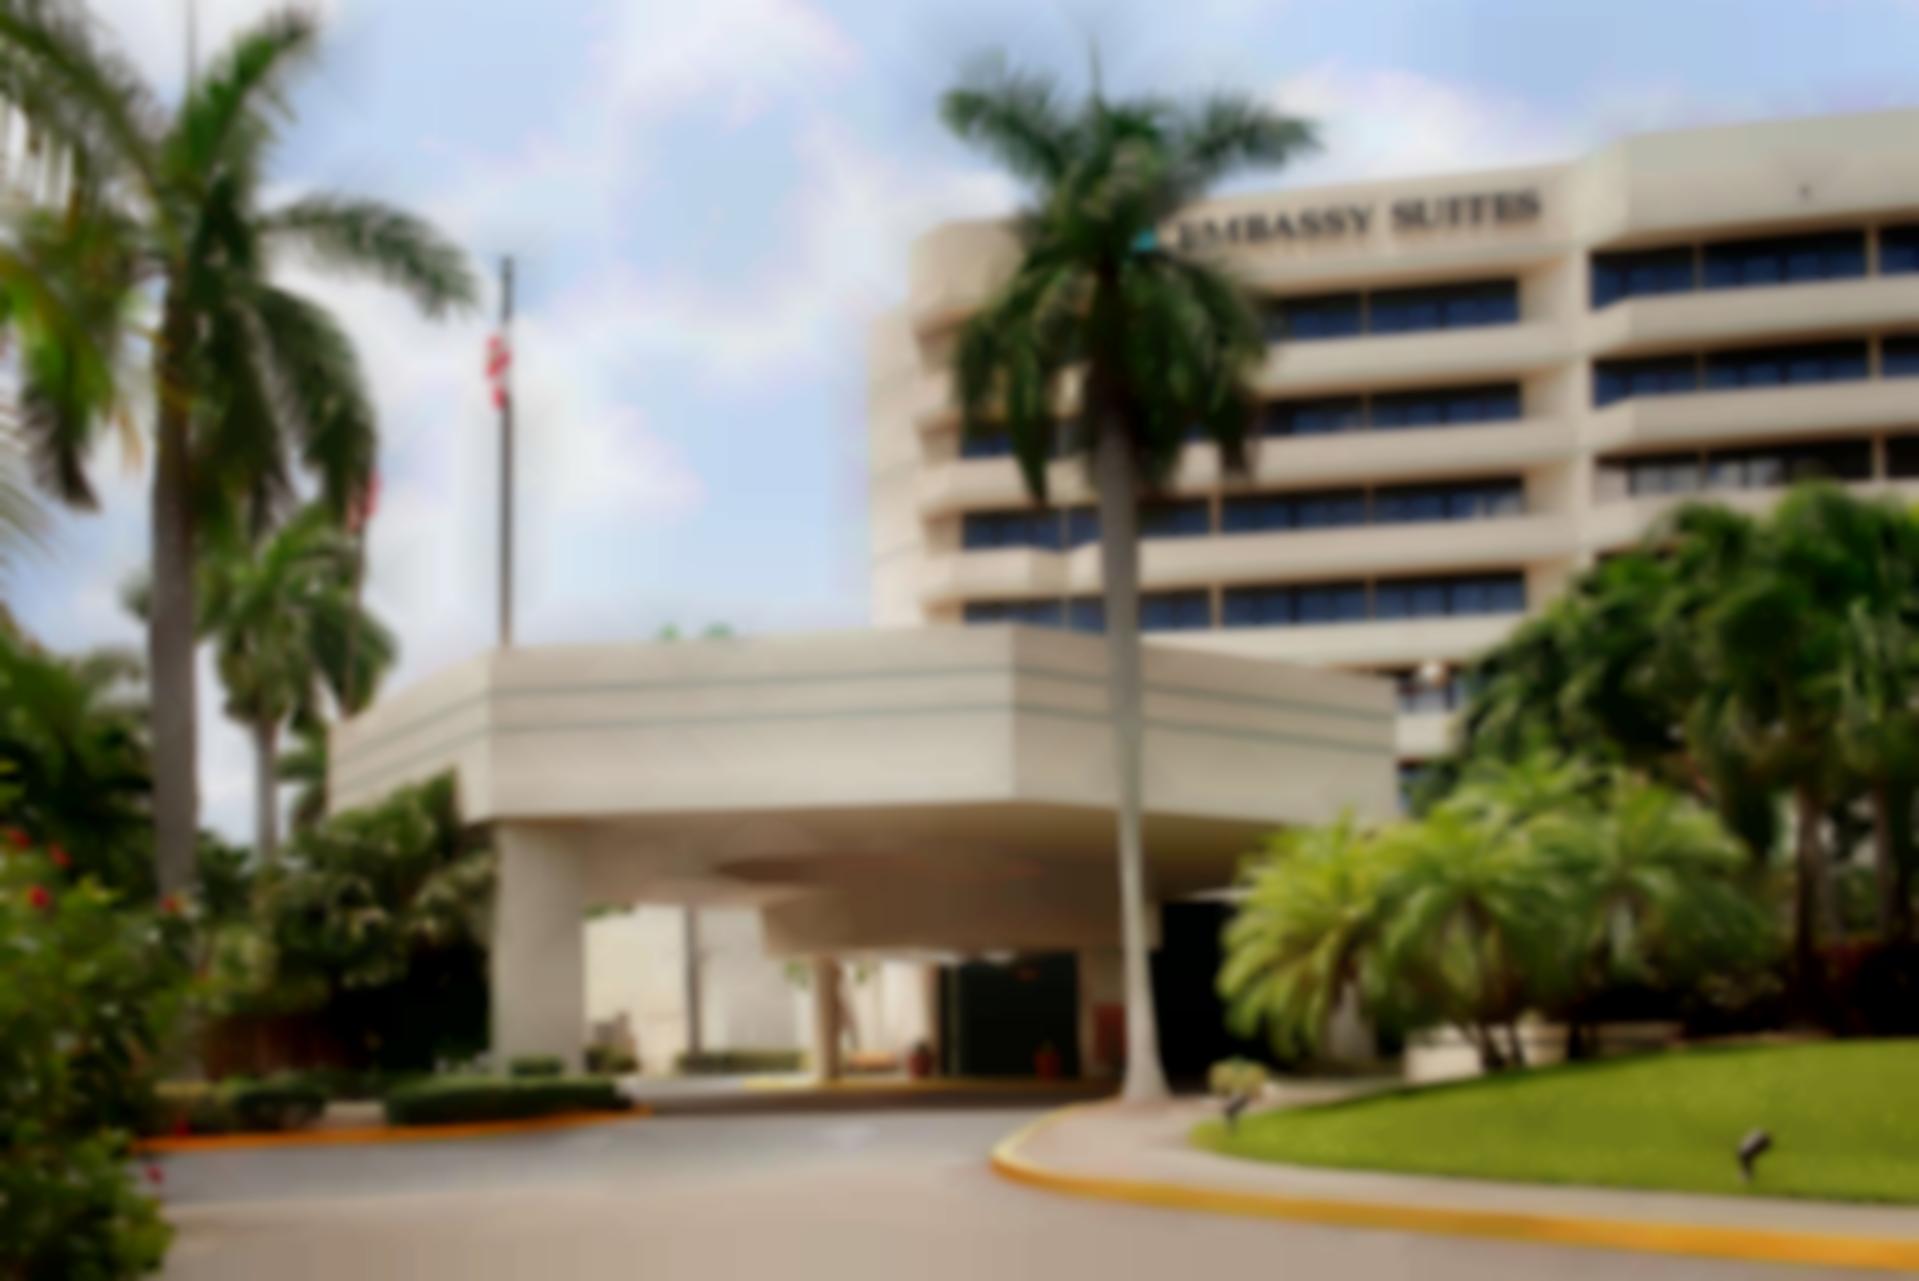 Embassy Suites Boca Raton